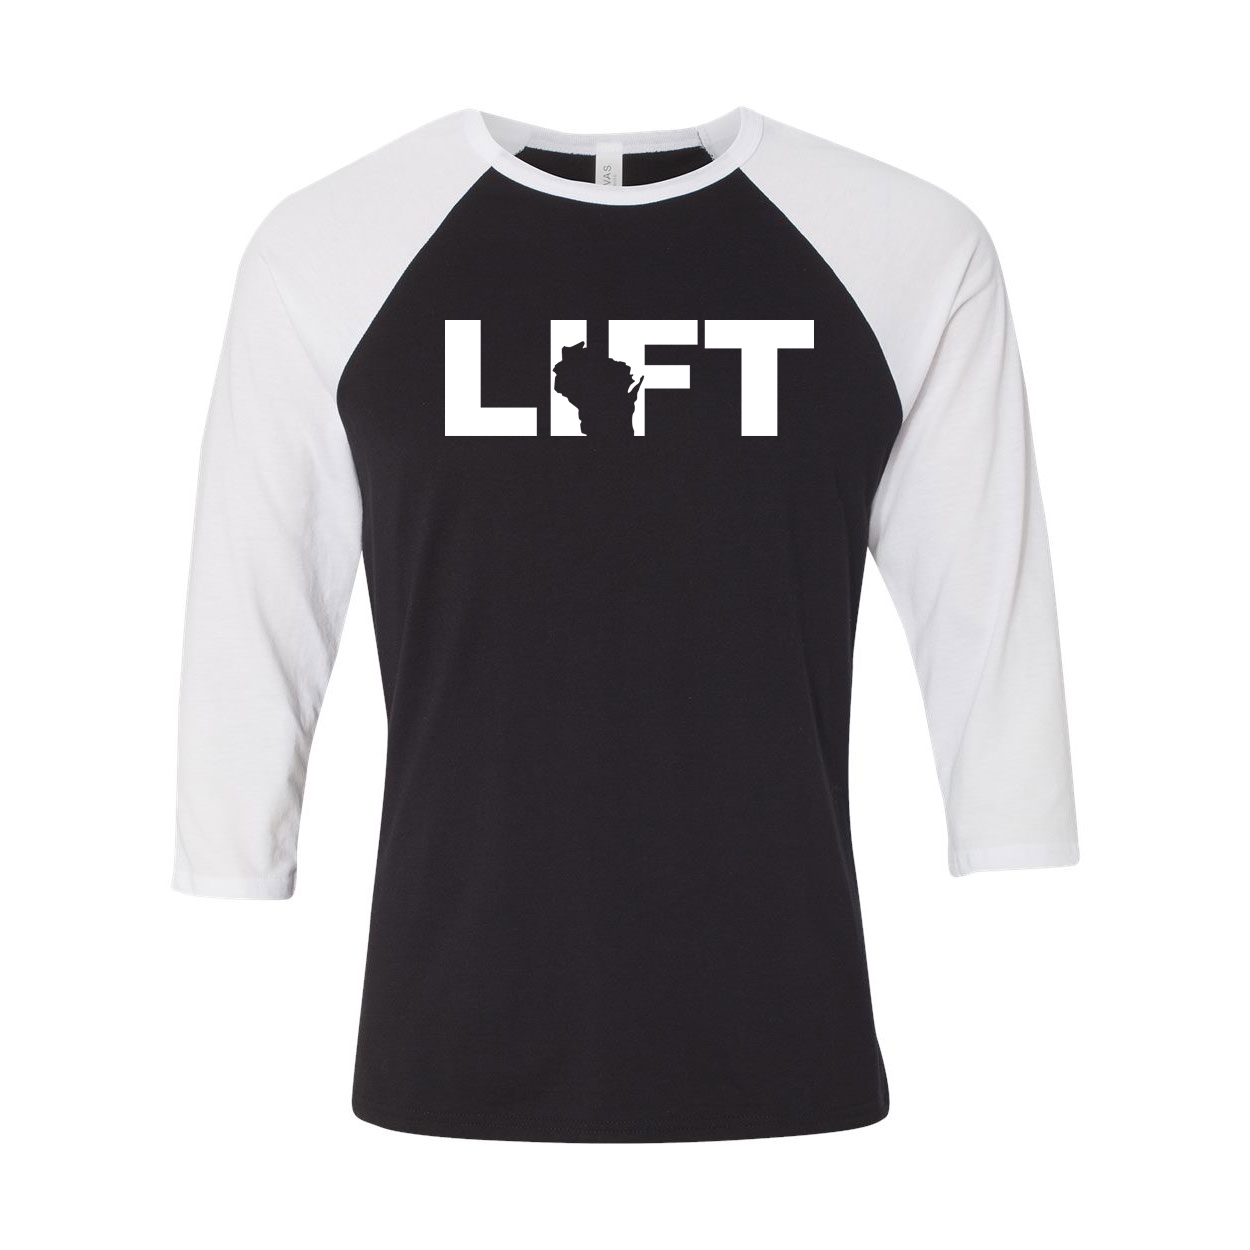 Lift Wisconsin Classic Raglan Shirt Black/White (White Logo)